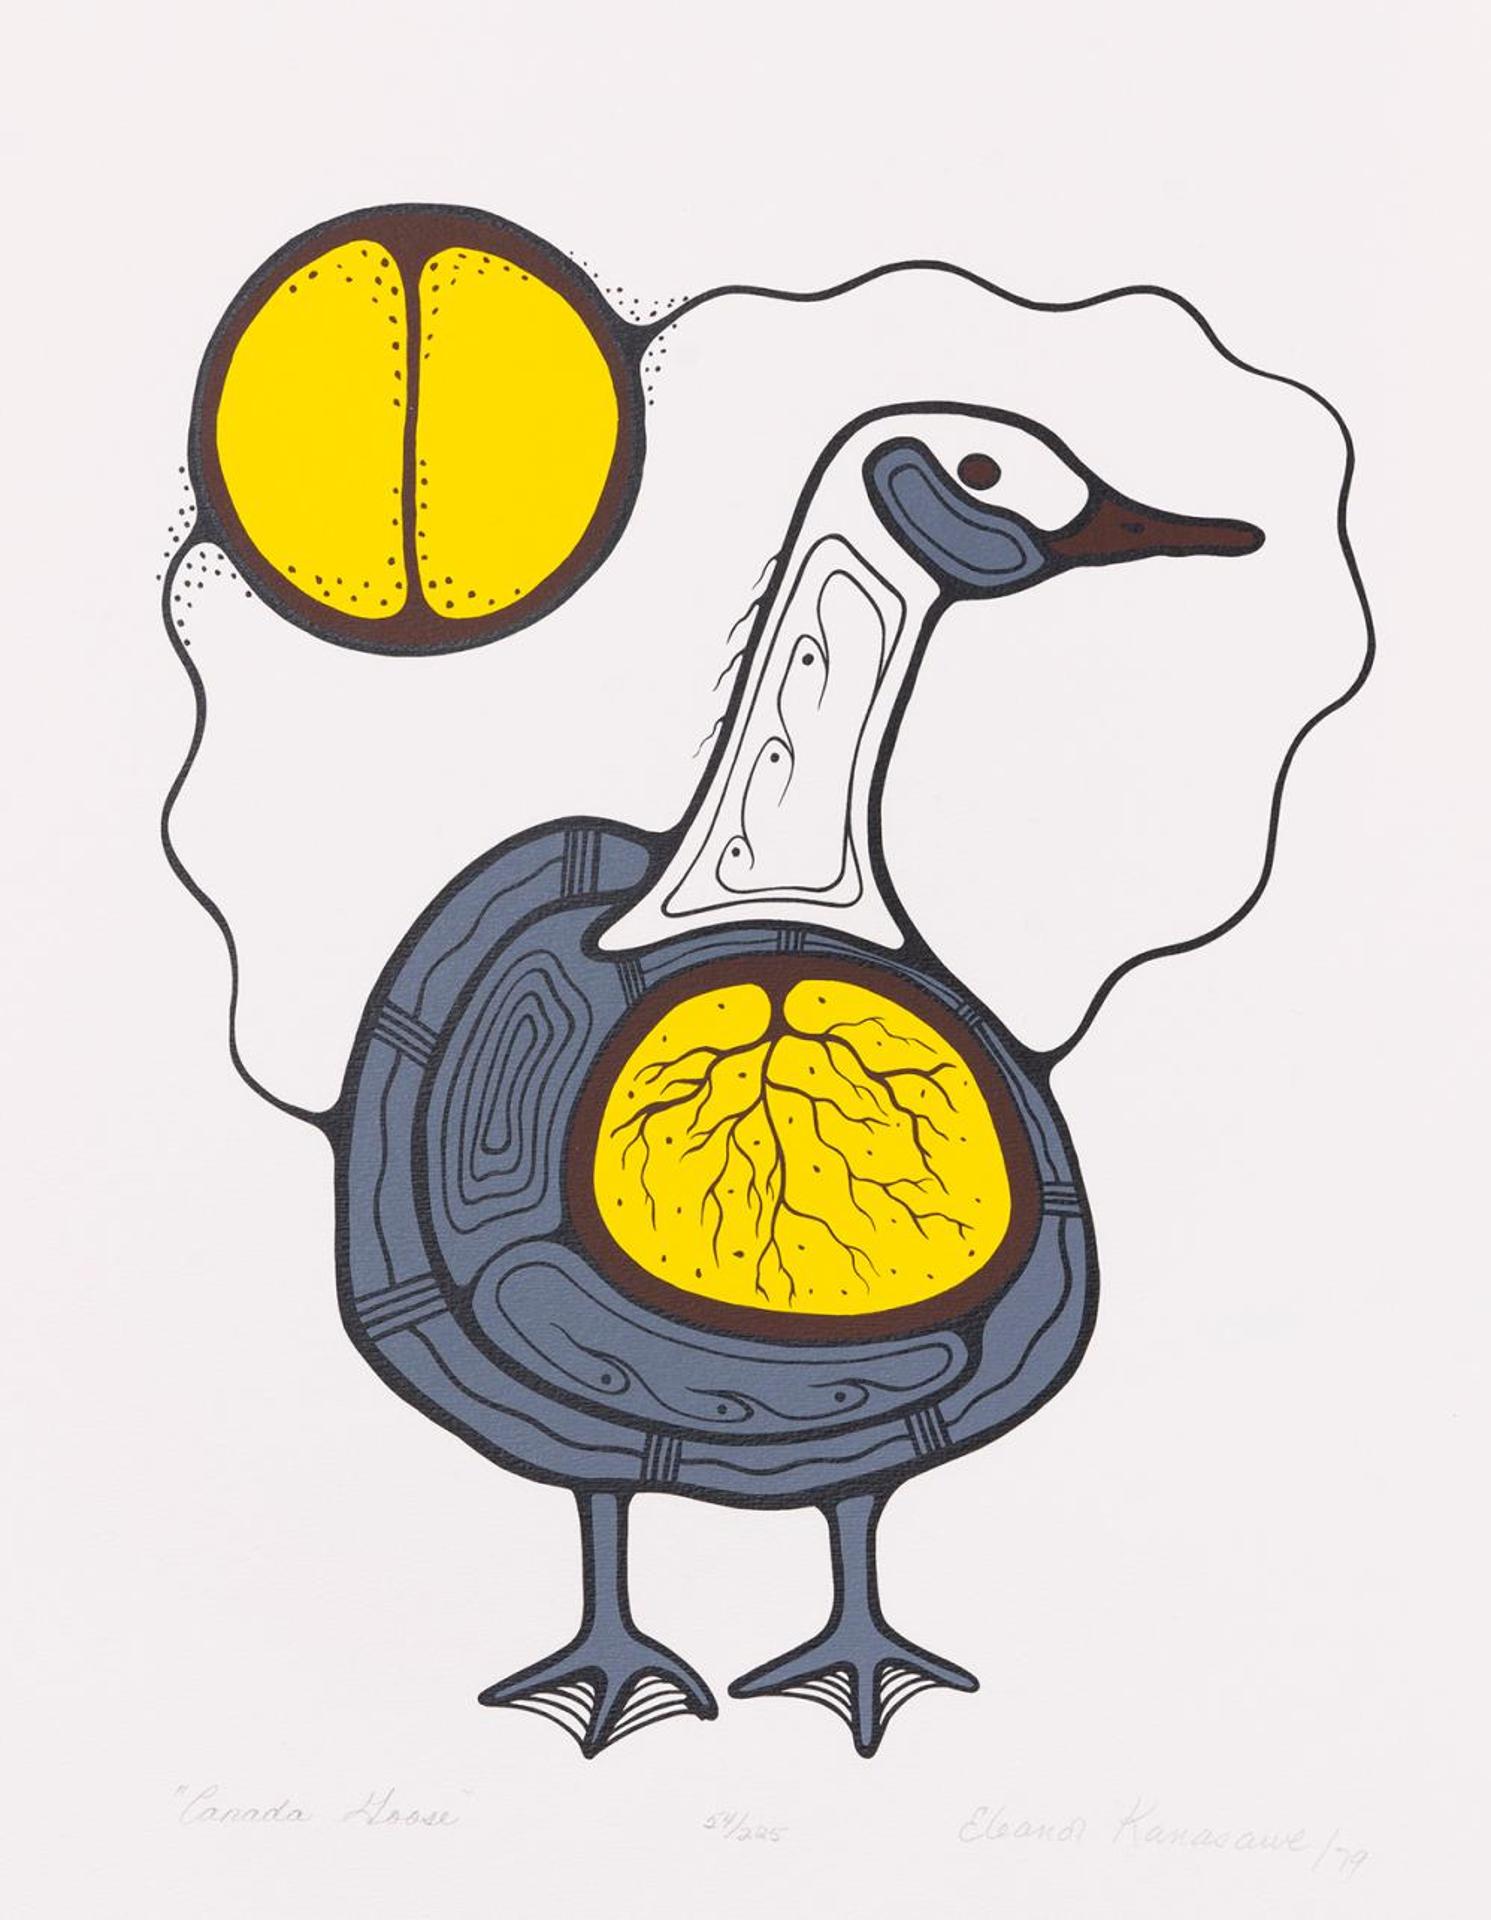 Eleanor Kanasawe (1958) - Canada Goose